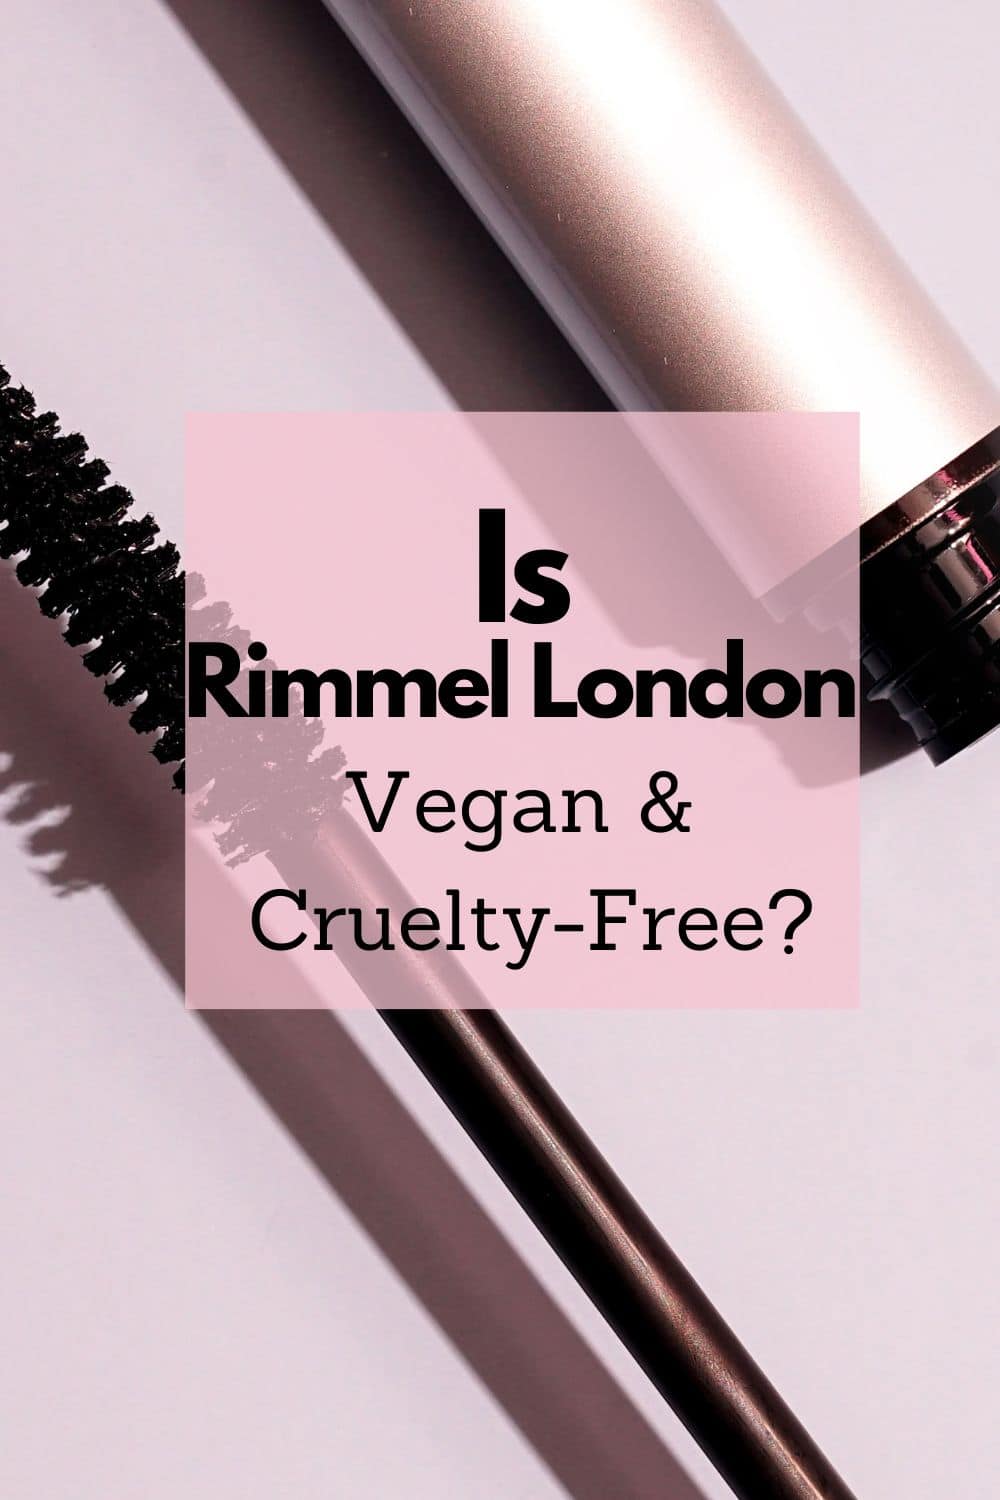 Rimmel London Vegan List (Cruelty-Free)